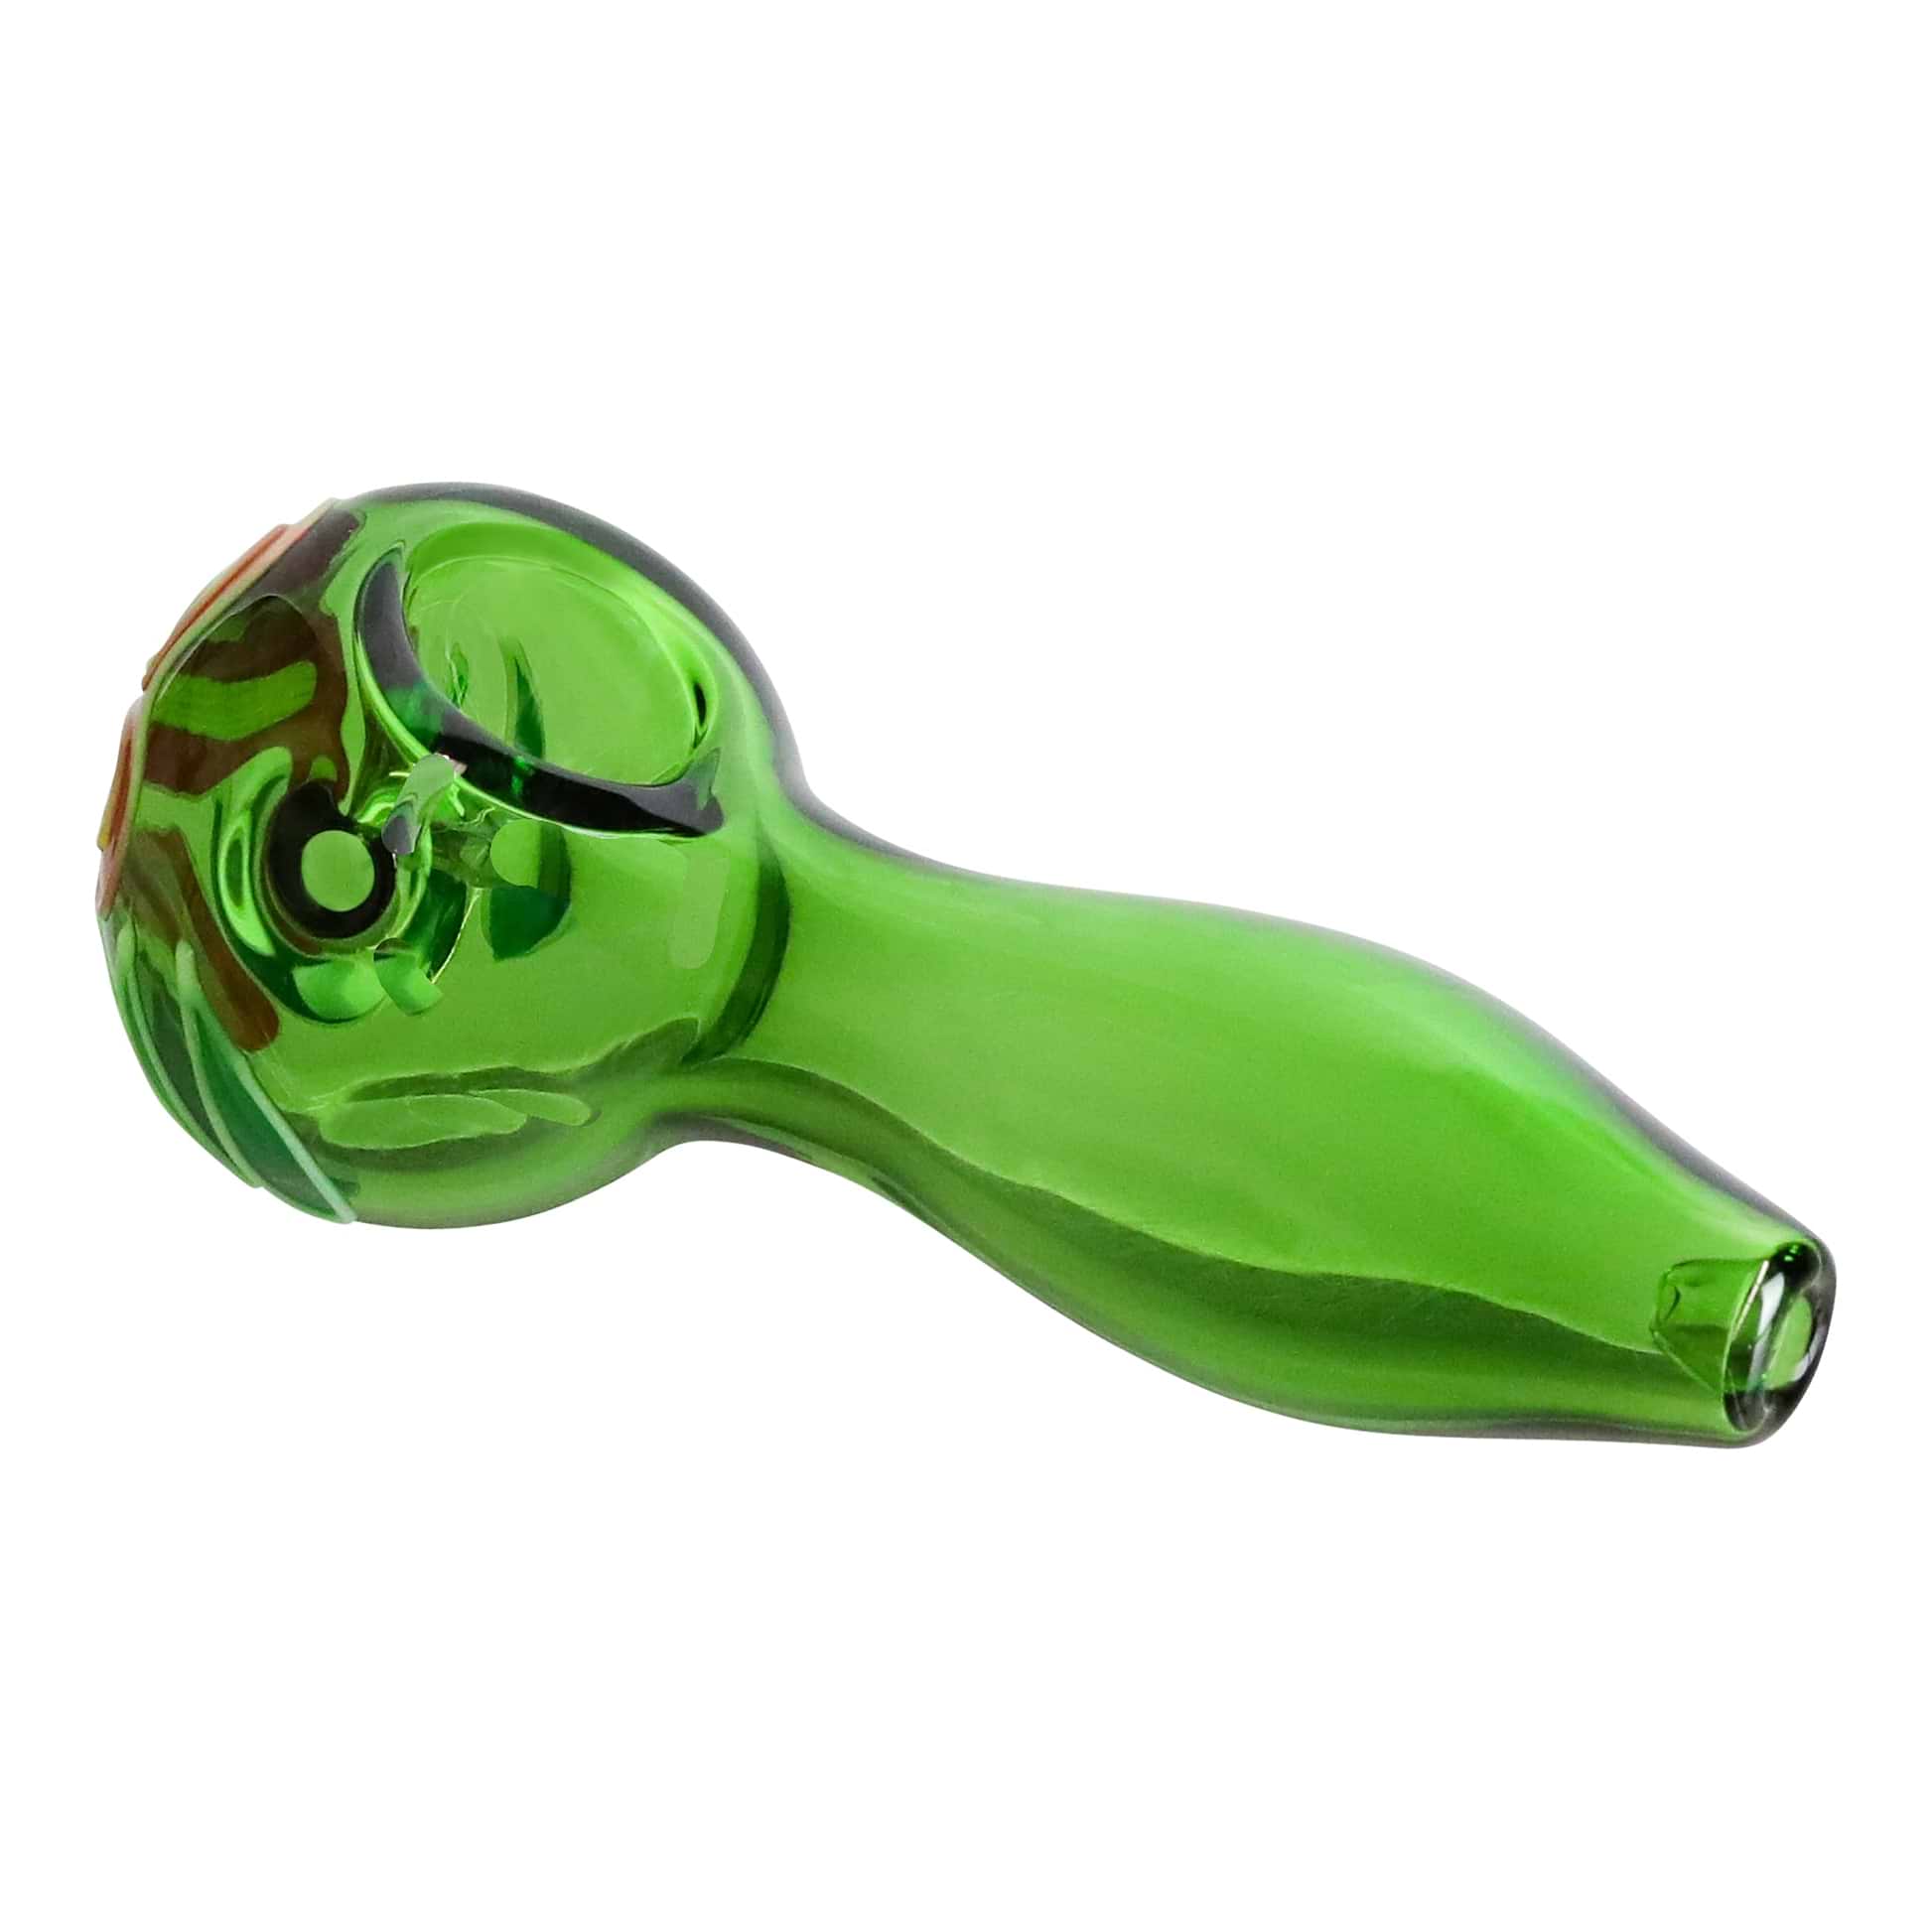 Glowing Mushroom Pipe - 4.5in Green